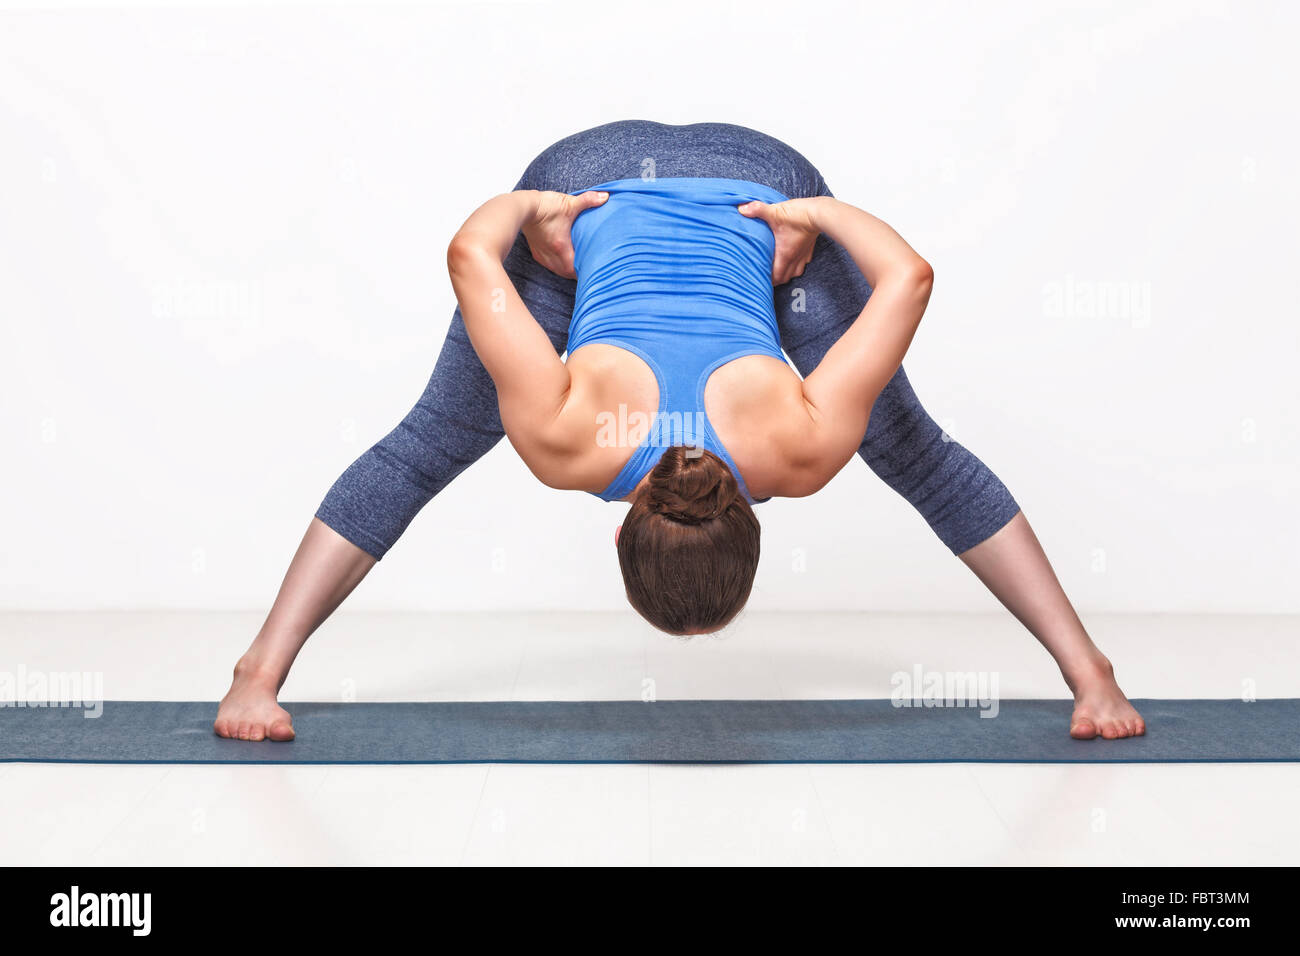 Sporty fit woman practices Ashtanga Vinyasa yoga Stock Photo